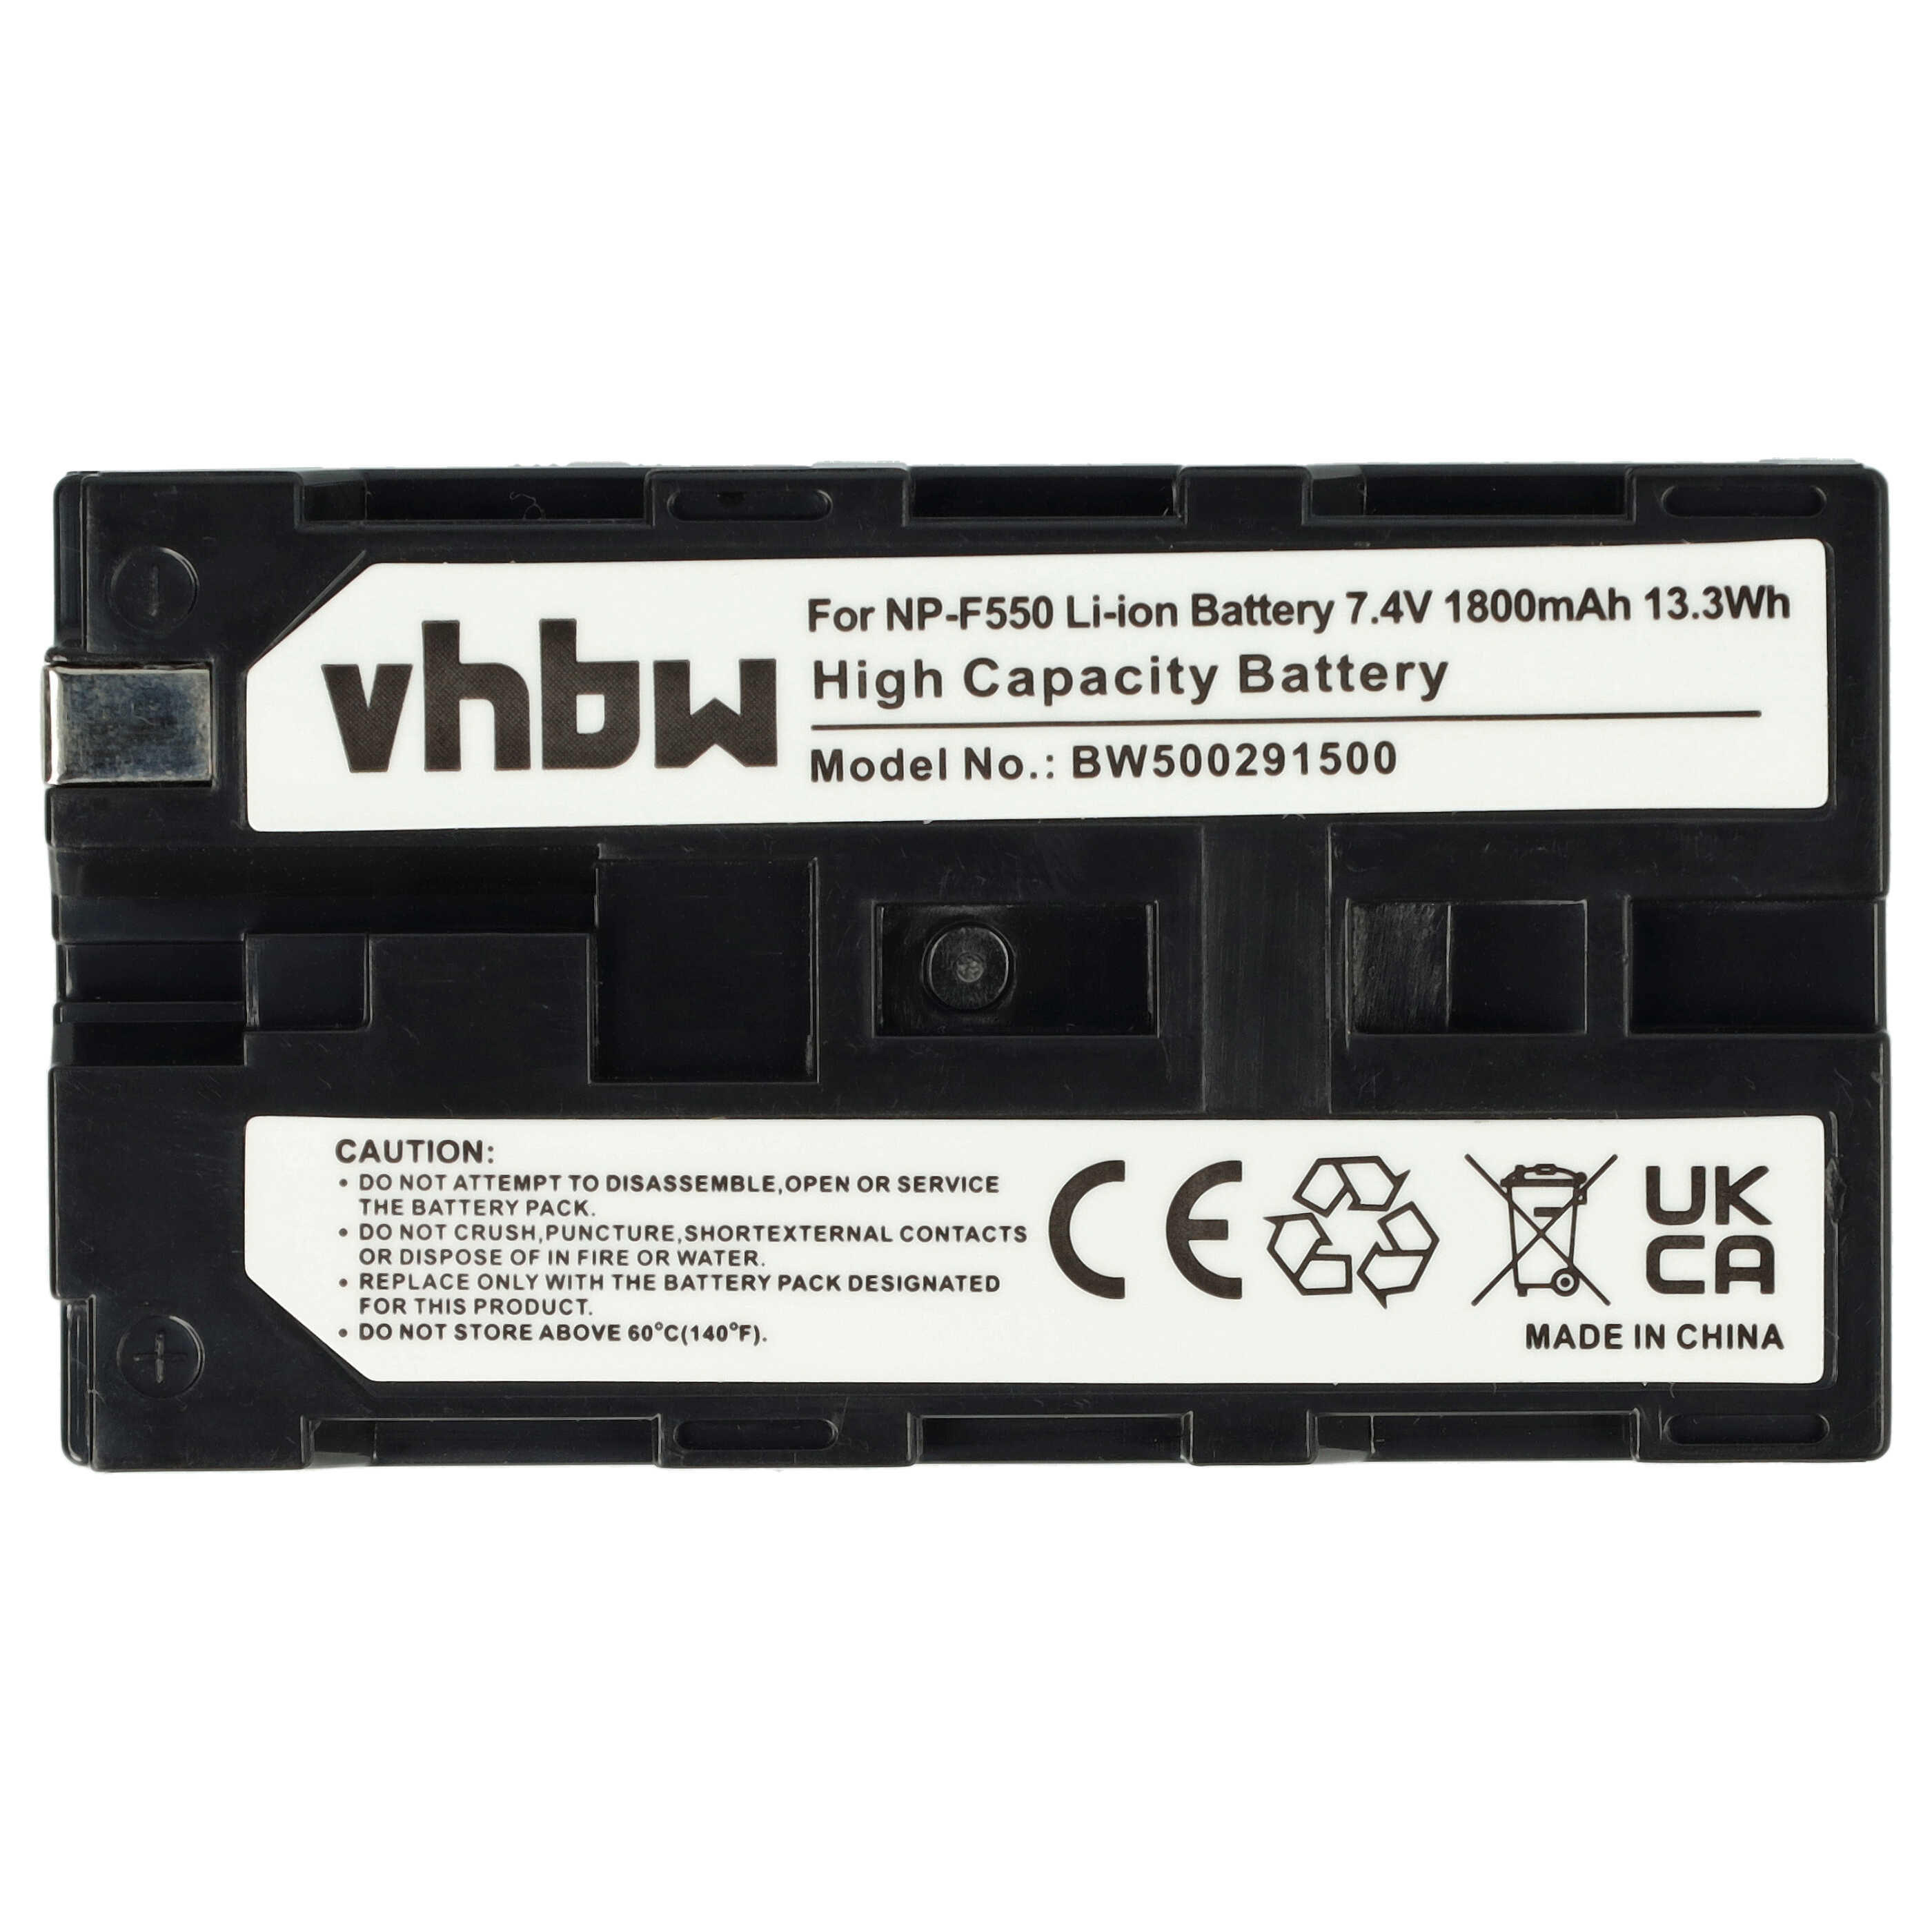 Akumulator do kamery cyfrowej / wideo zamiennik Grundig BP-9, BP-8, BP-10 - 1800 mAh 7,2 V Li-Ion